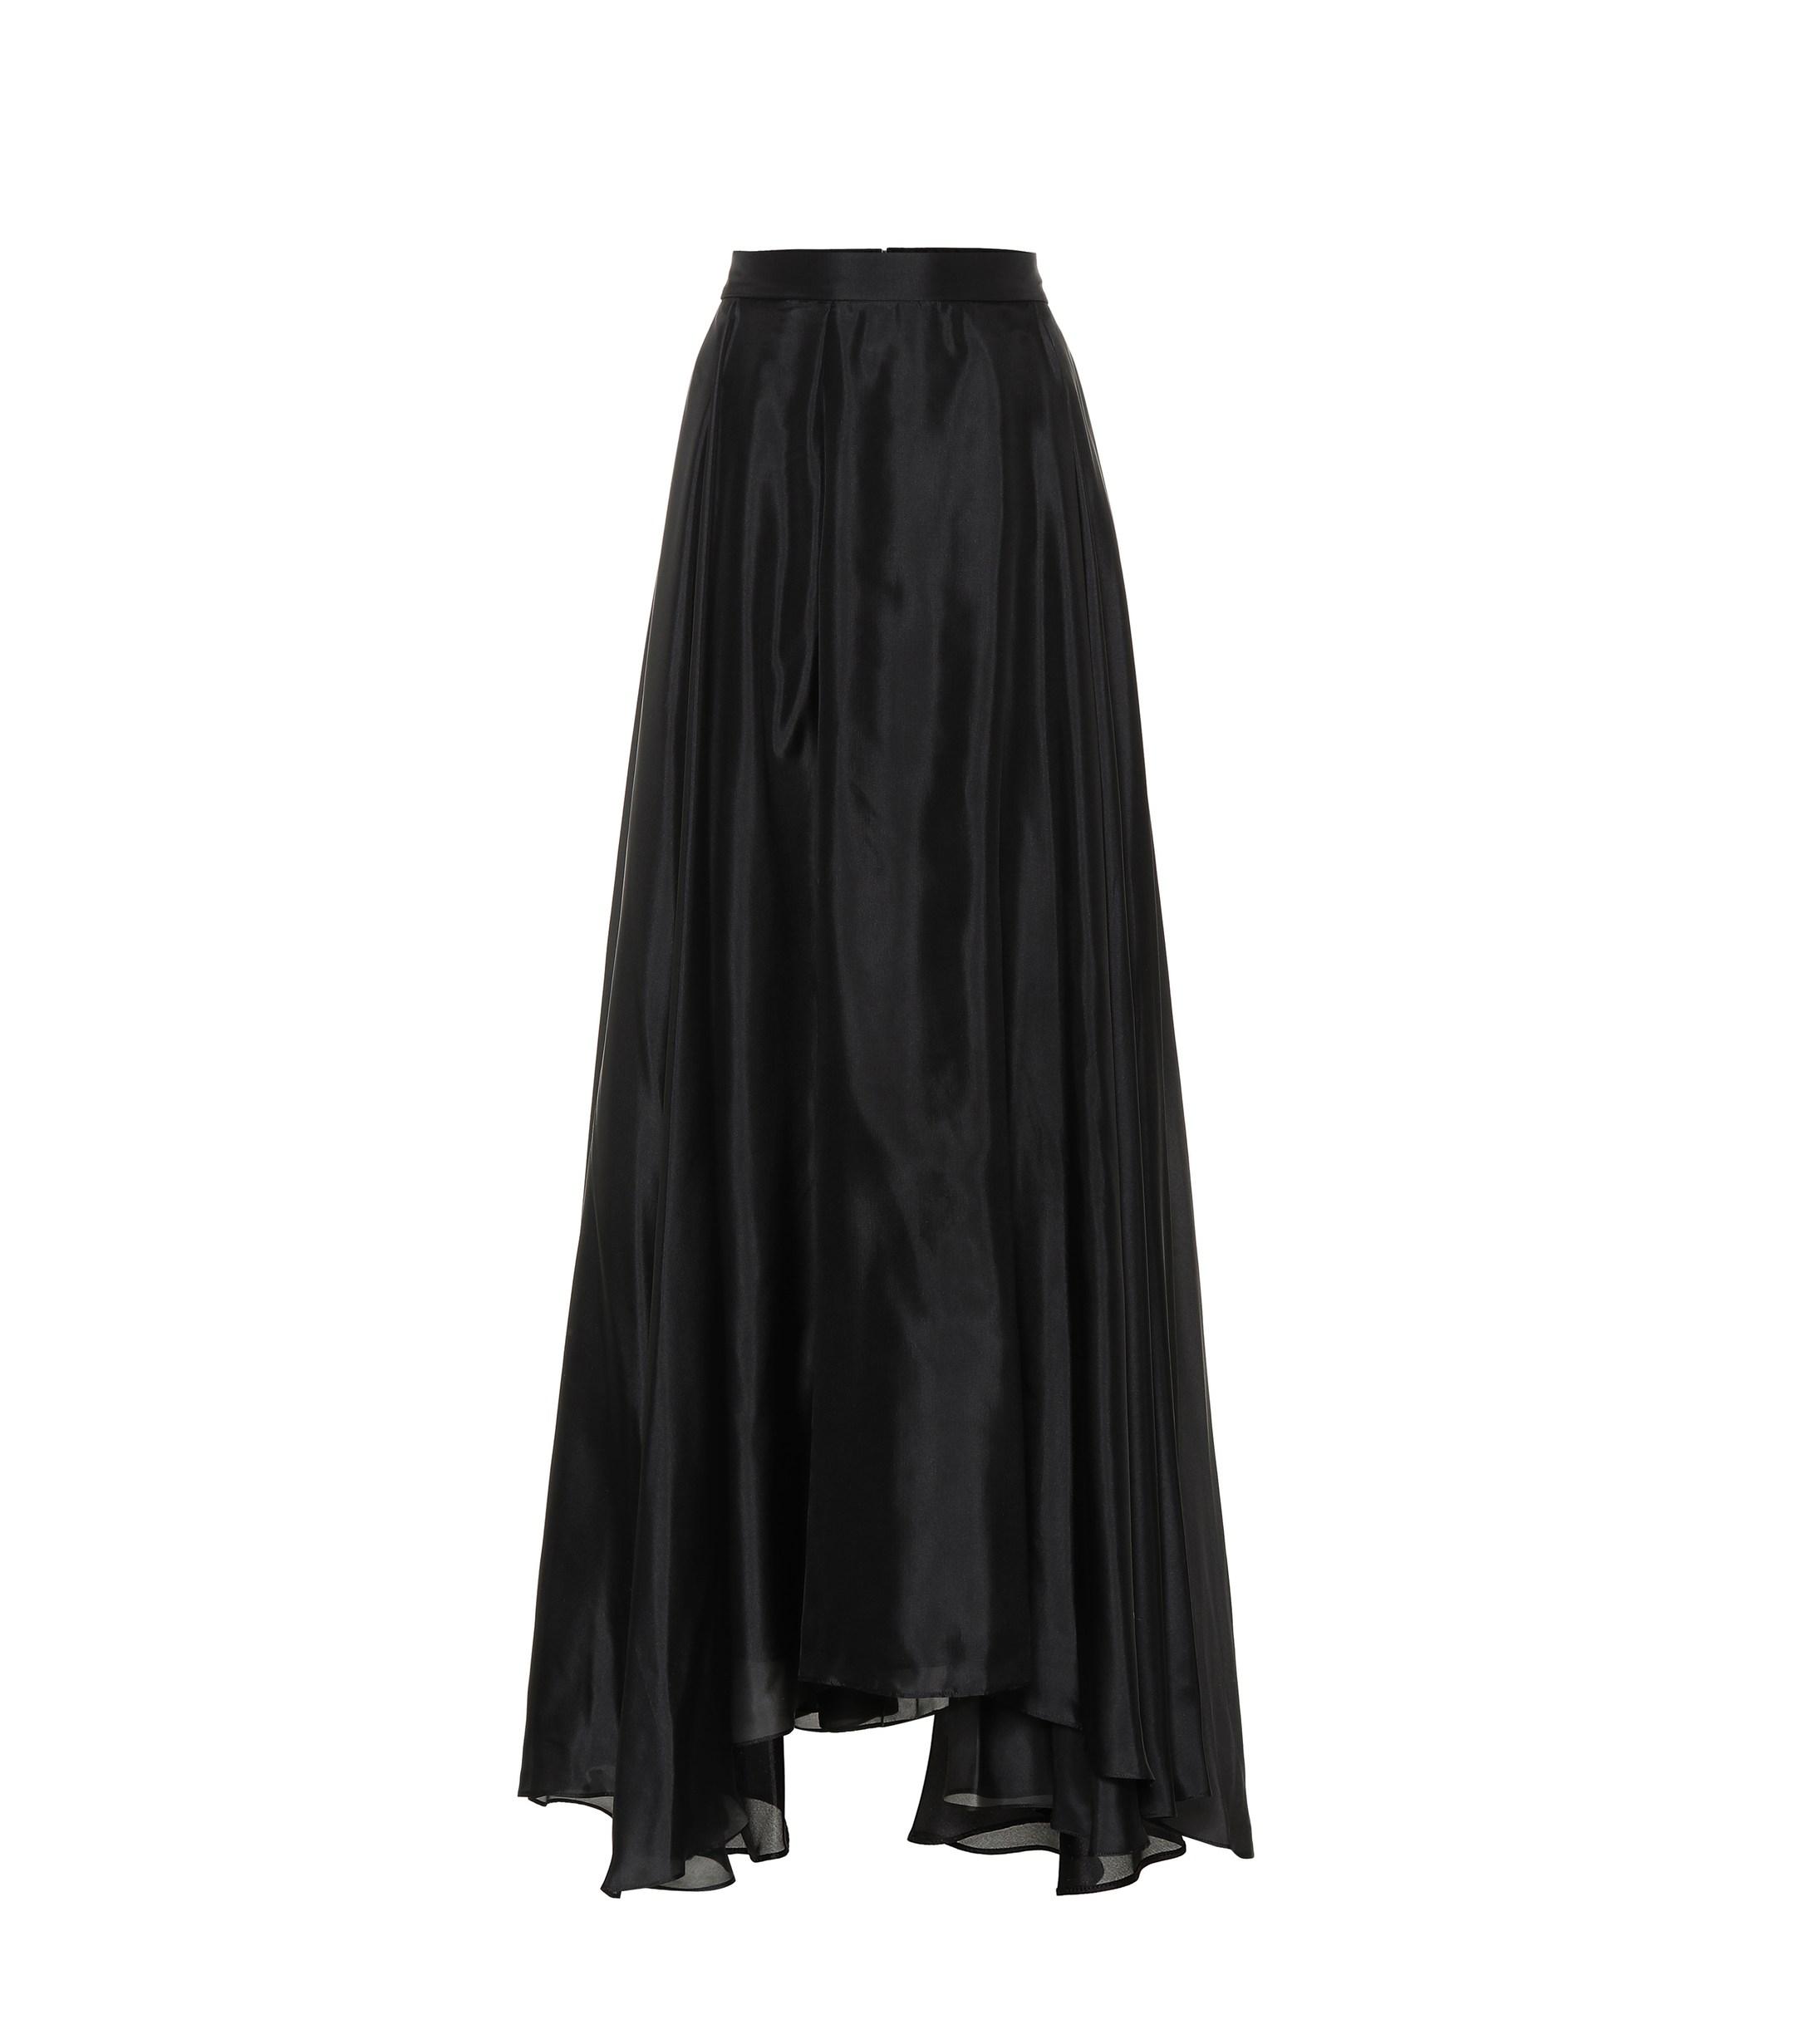 Prada Silk Satin Maxi Skirt in Black - Lyst